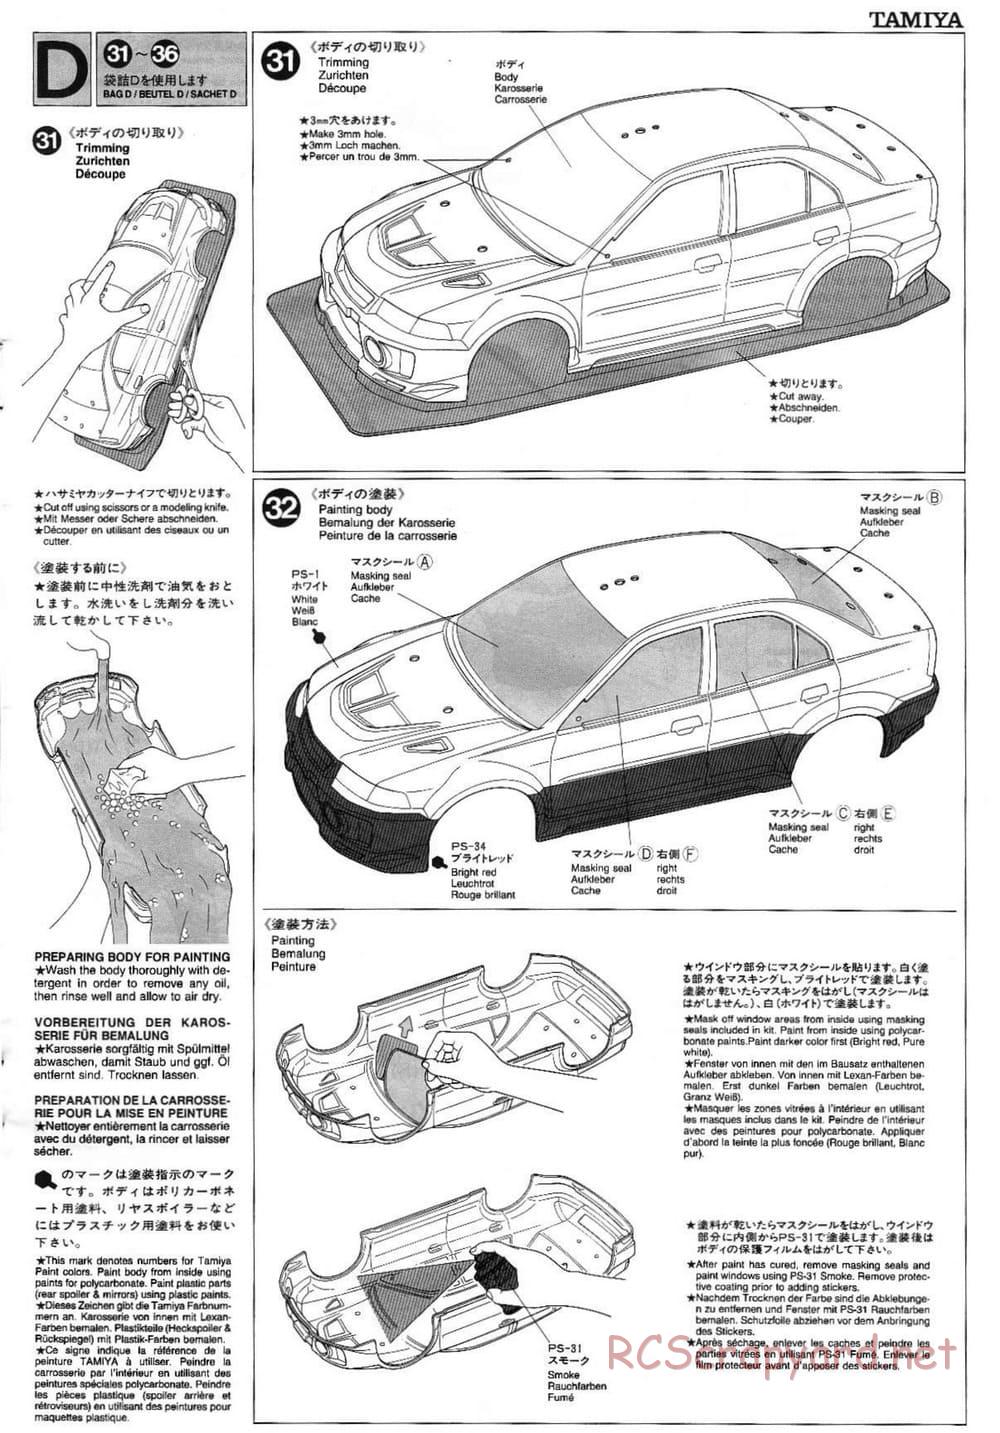 Tamiya - Mitsubishi Lancer Evolution V WRC - TA-03F Chassis - Manual - Page 17